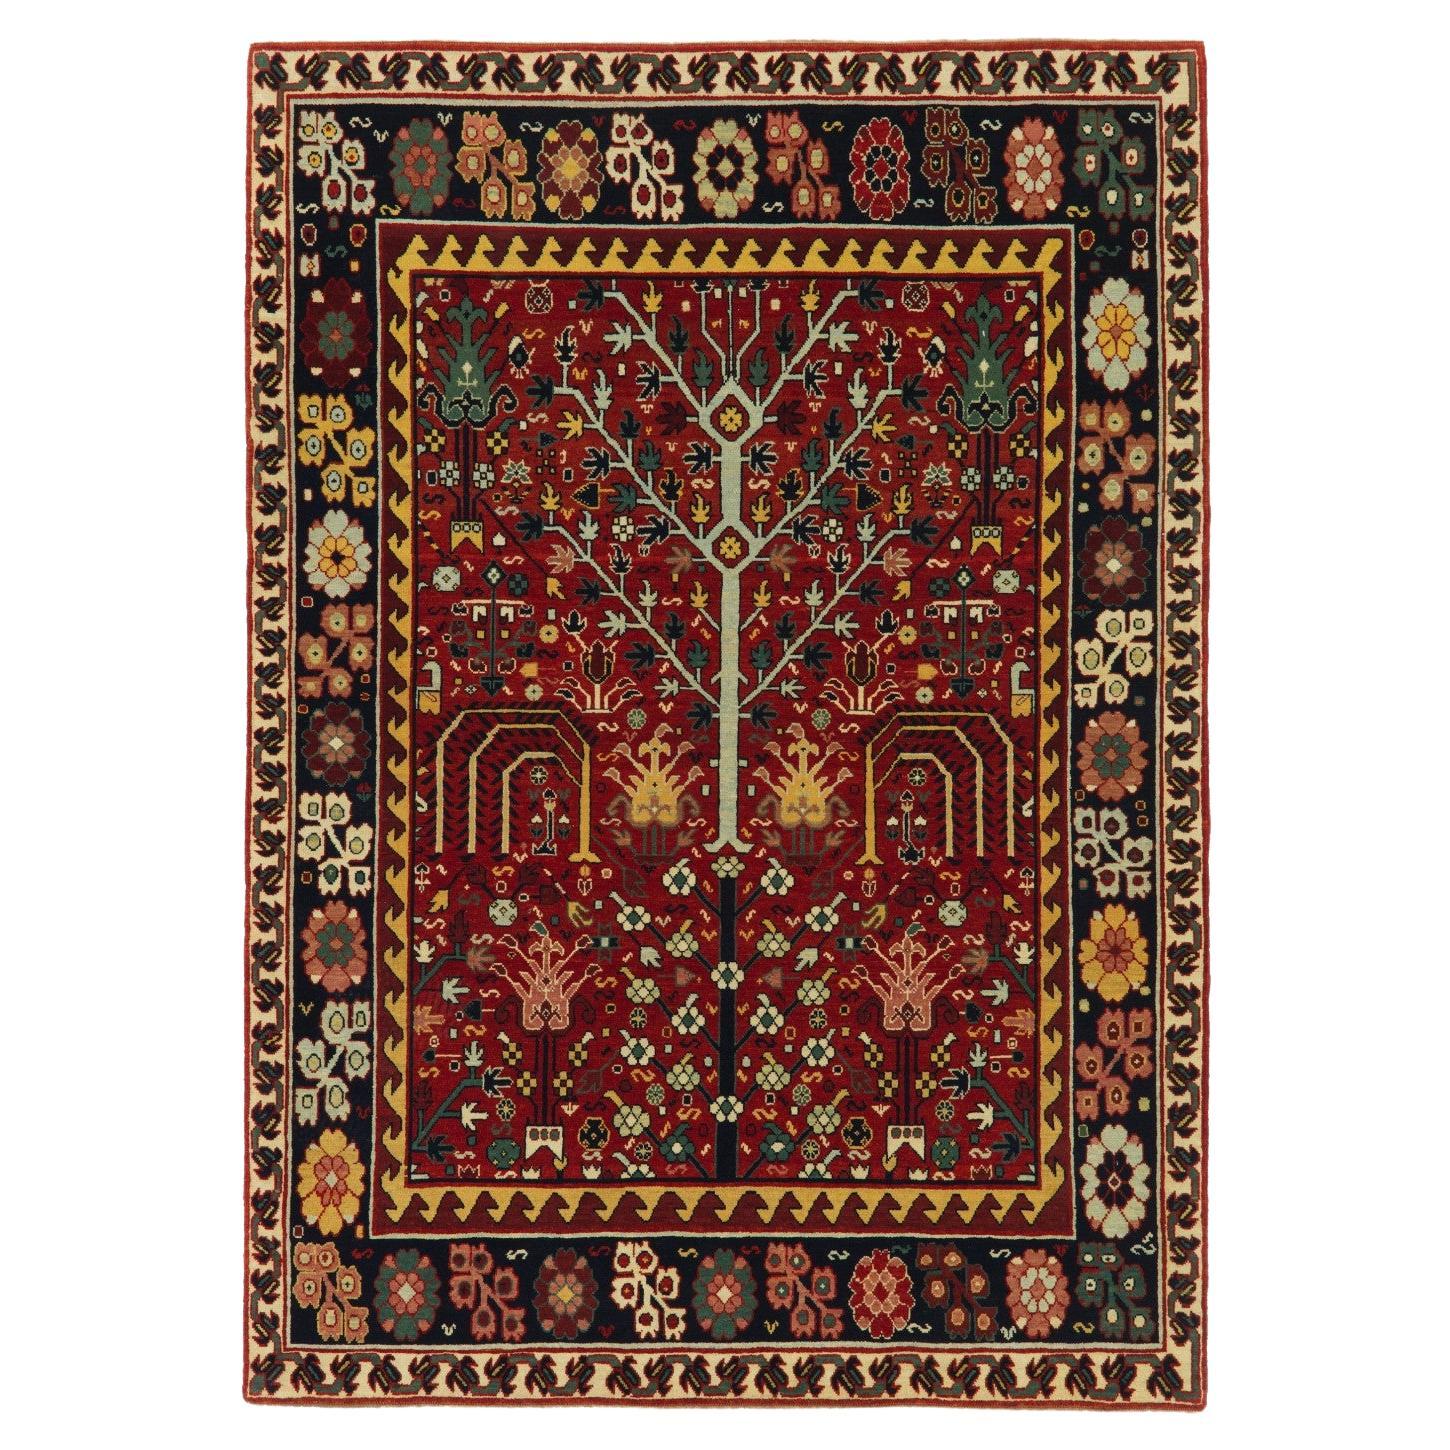 Ararat Rugs Bid Majnum on Red Field Rug, 17th C Revival Carpet, Natural Dyed For Sale